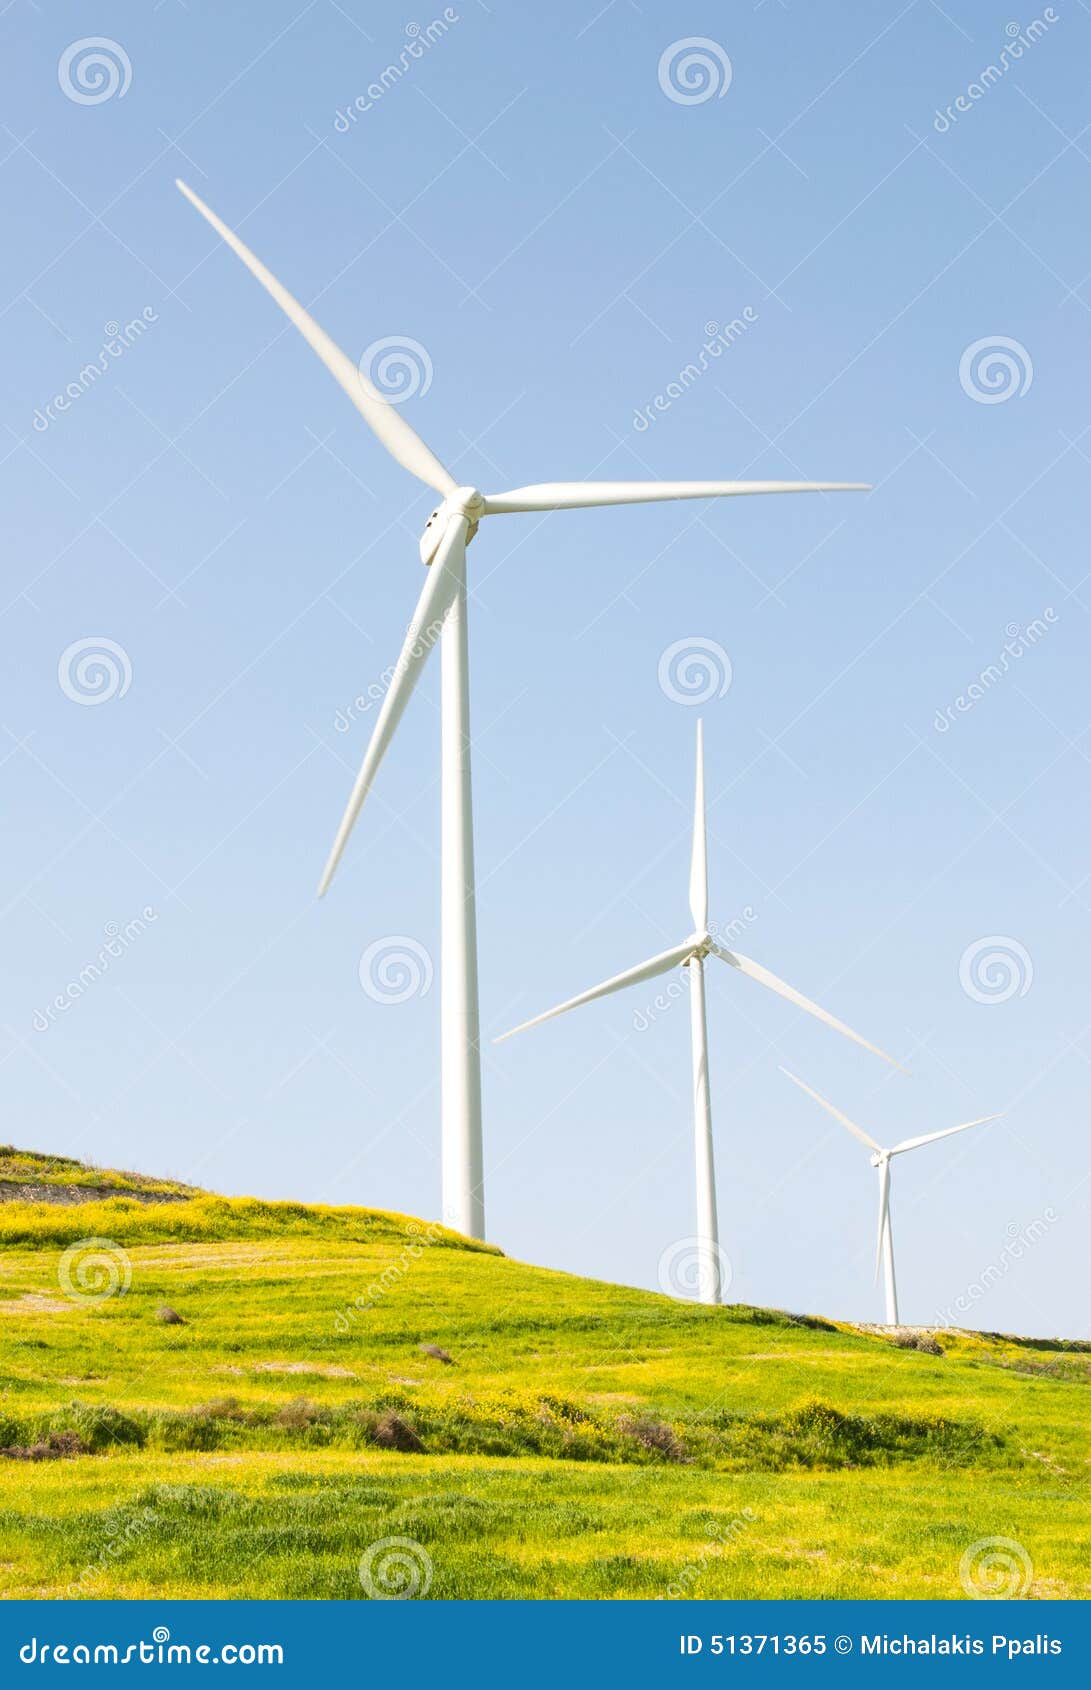 power generators on a turbine farm generating electricity from wind